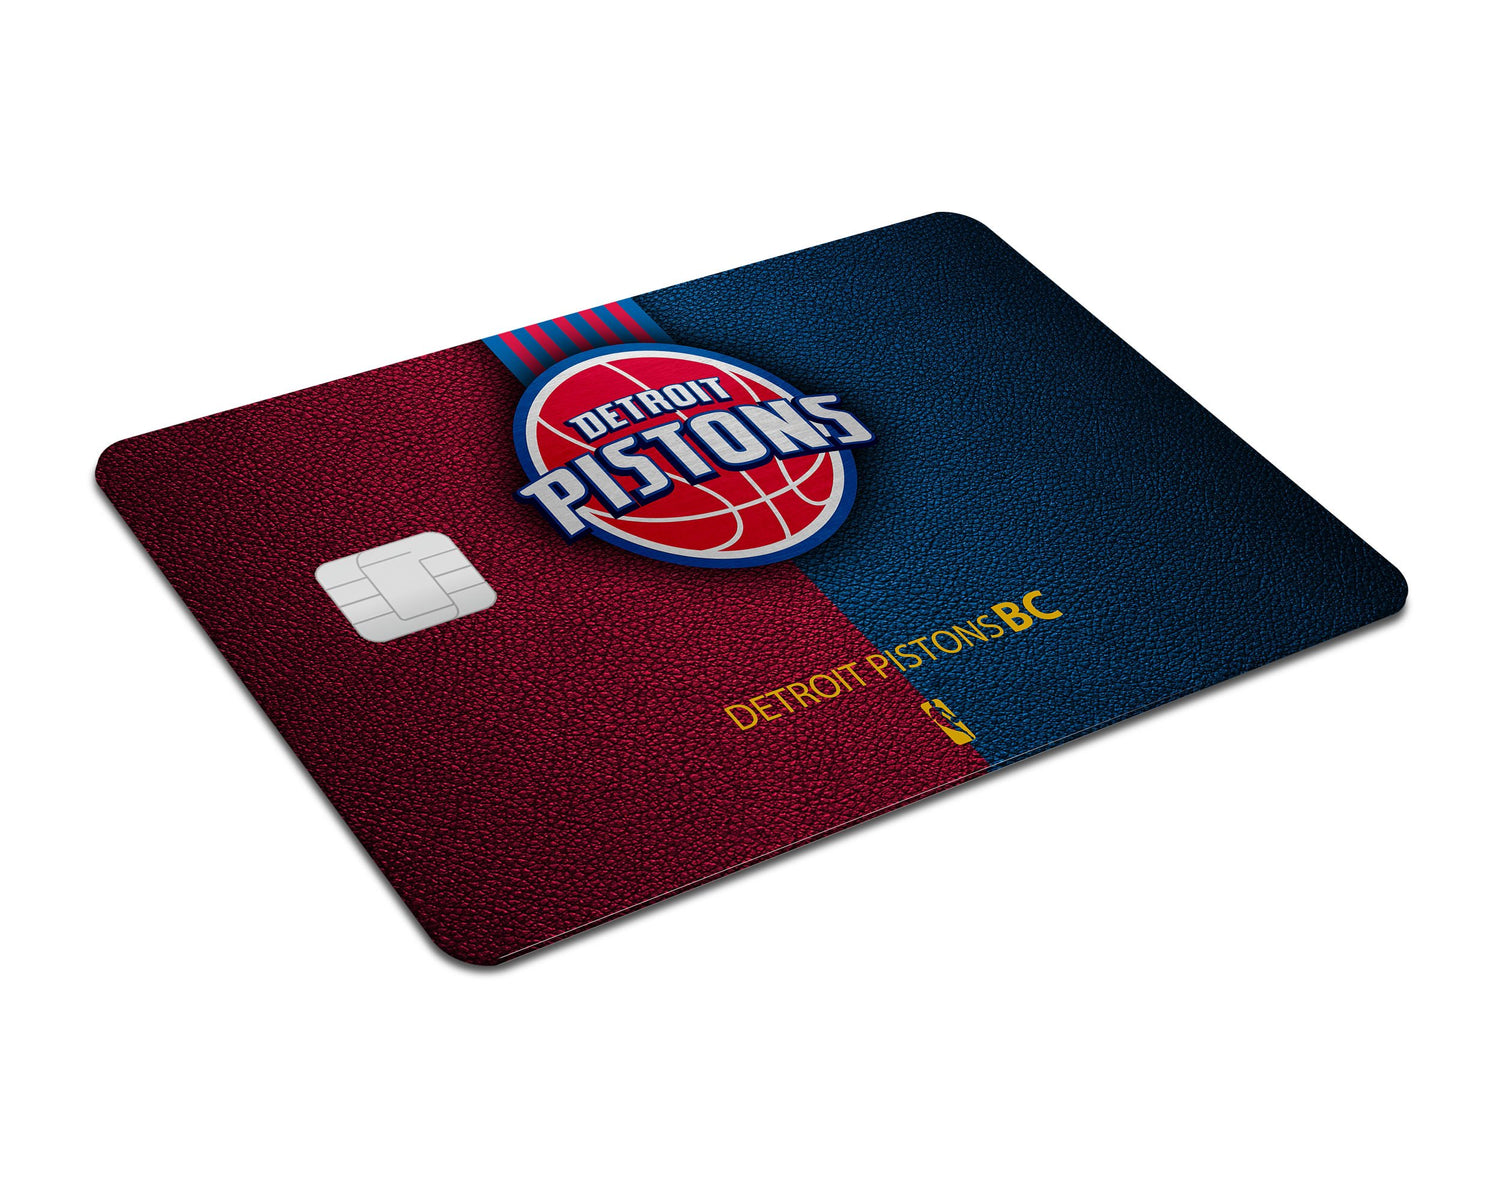 Flex Designs Credit Card Detroit Pistons Full Skins - Sports Basketball & Debit Card Skin